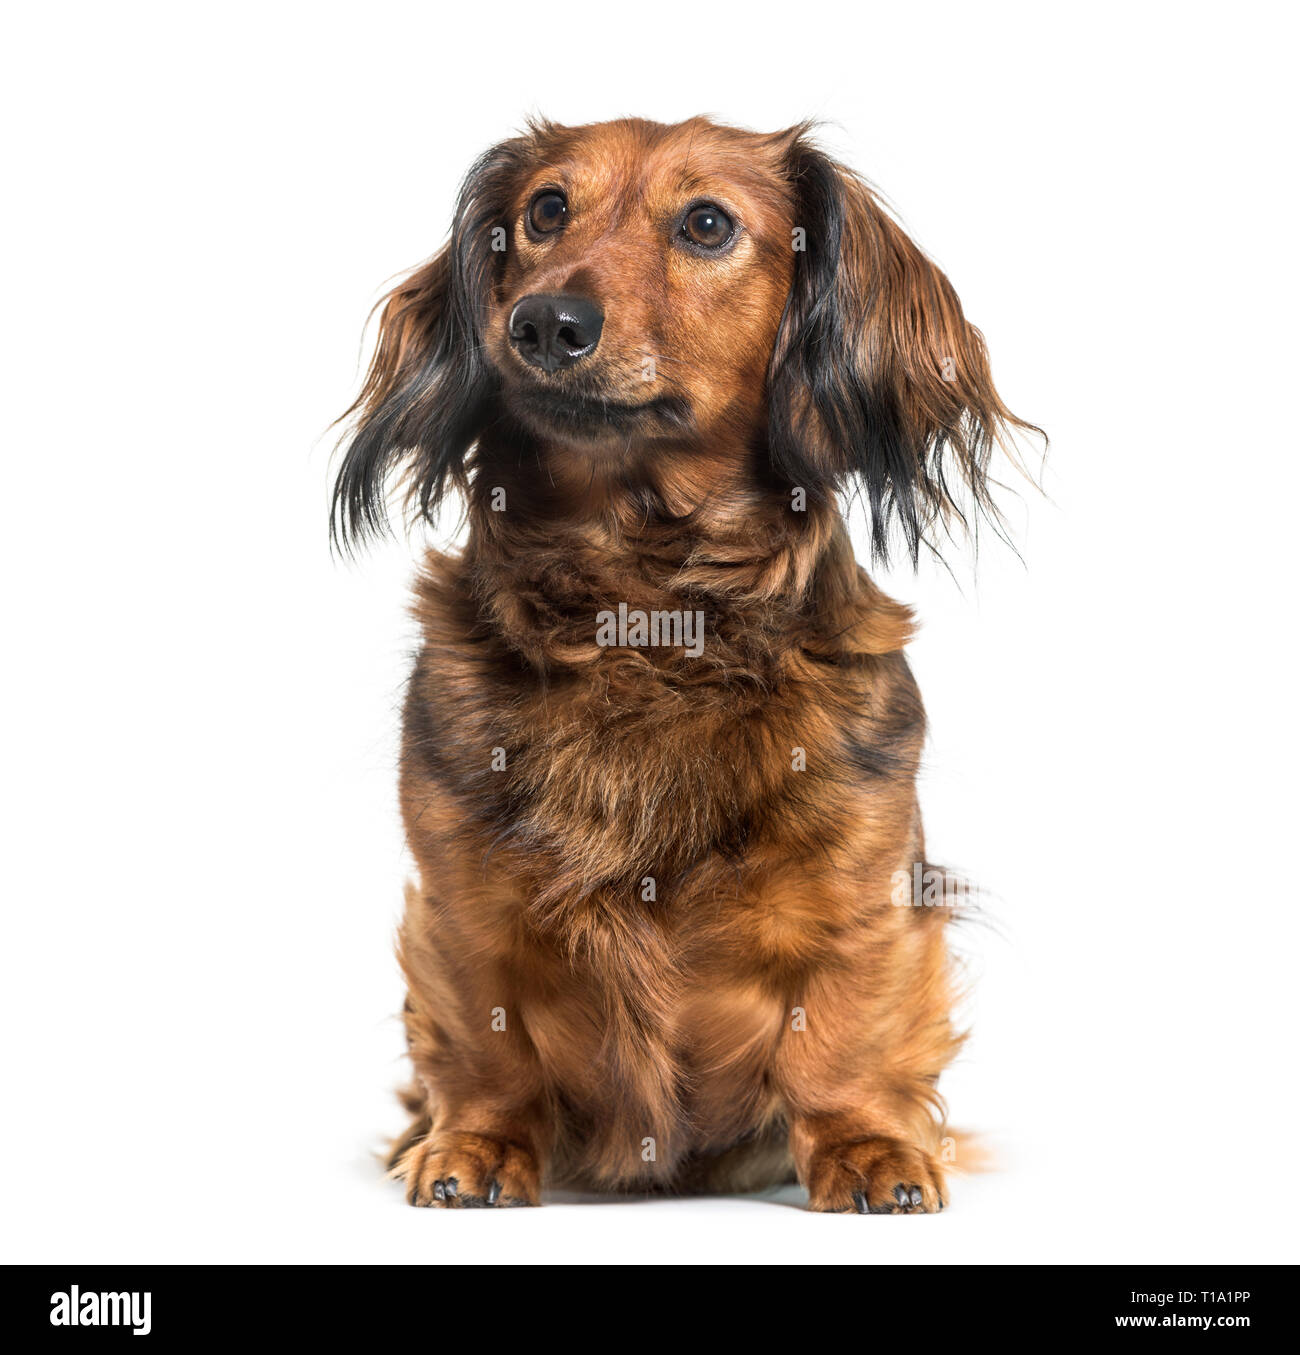 Dachshund, sausage dog, wiener dog sitting in front of white background Stock Photo